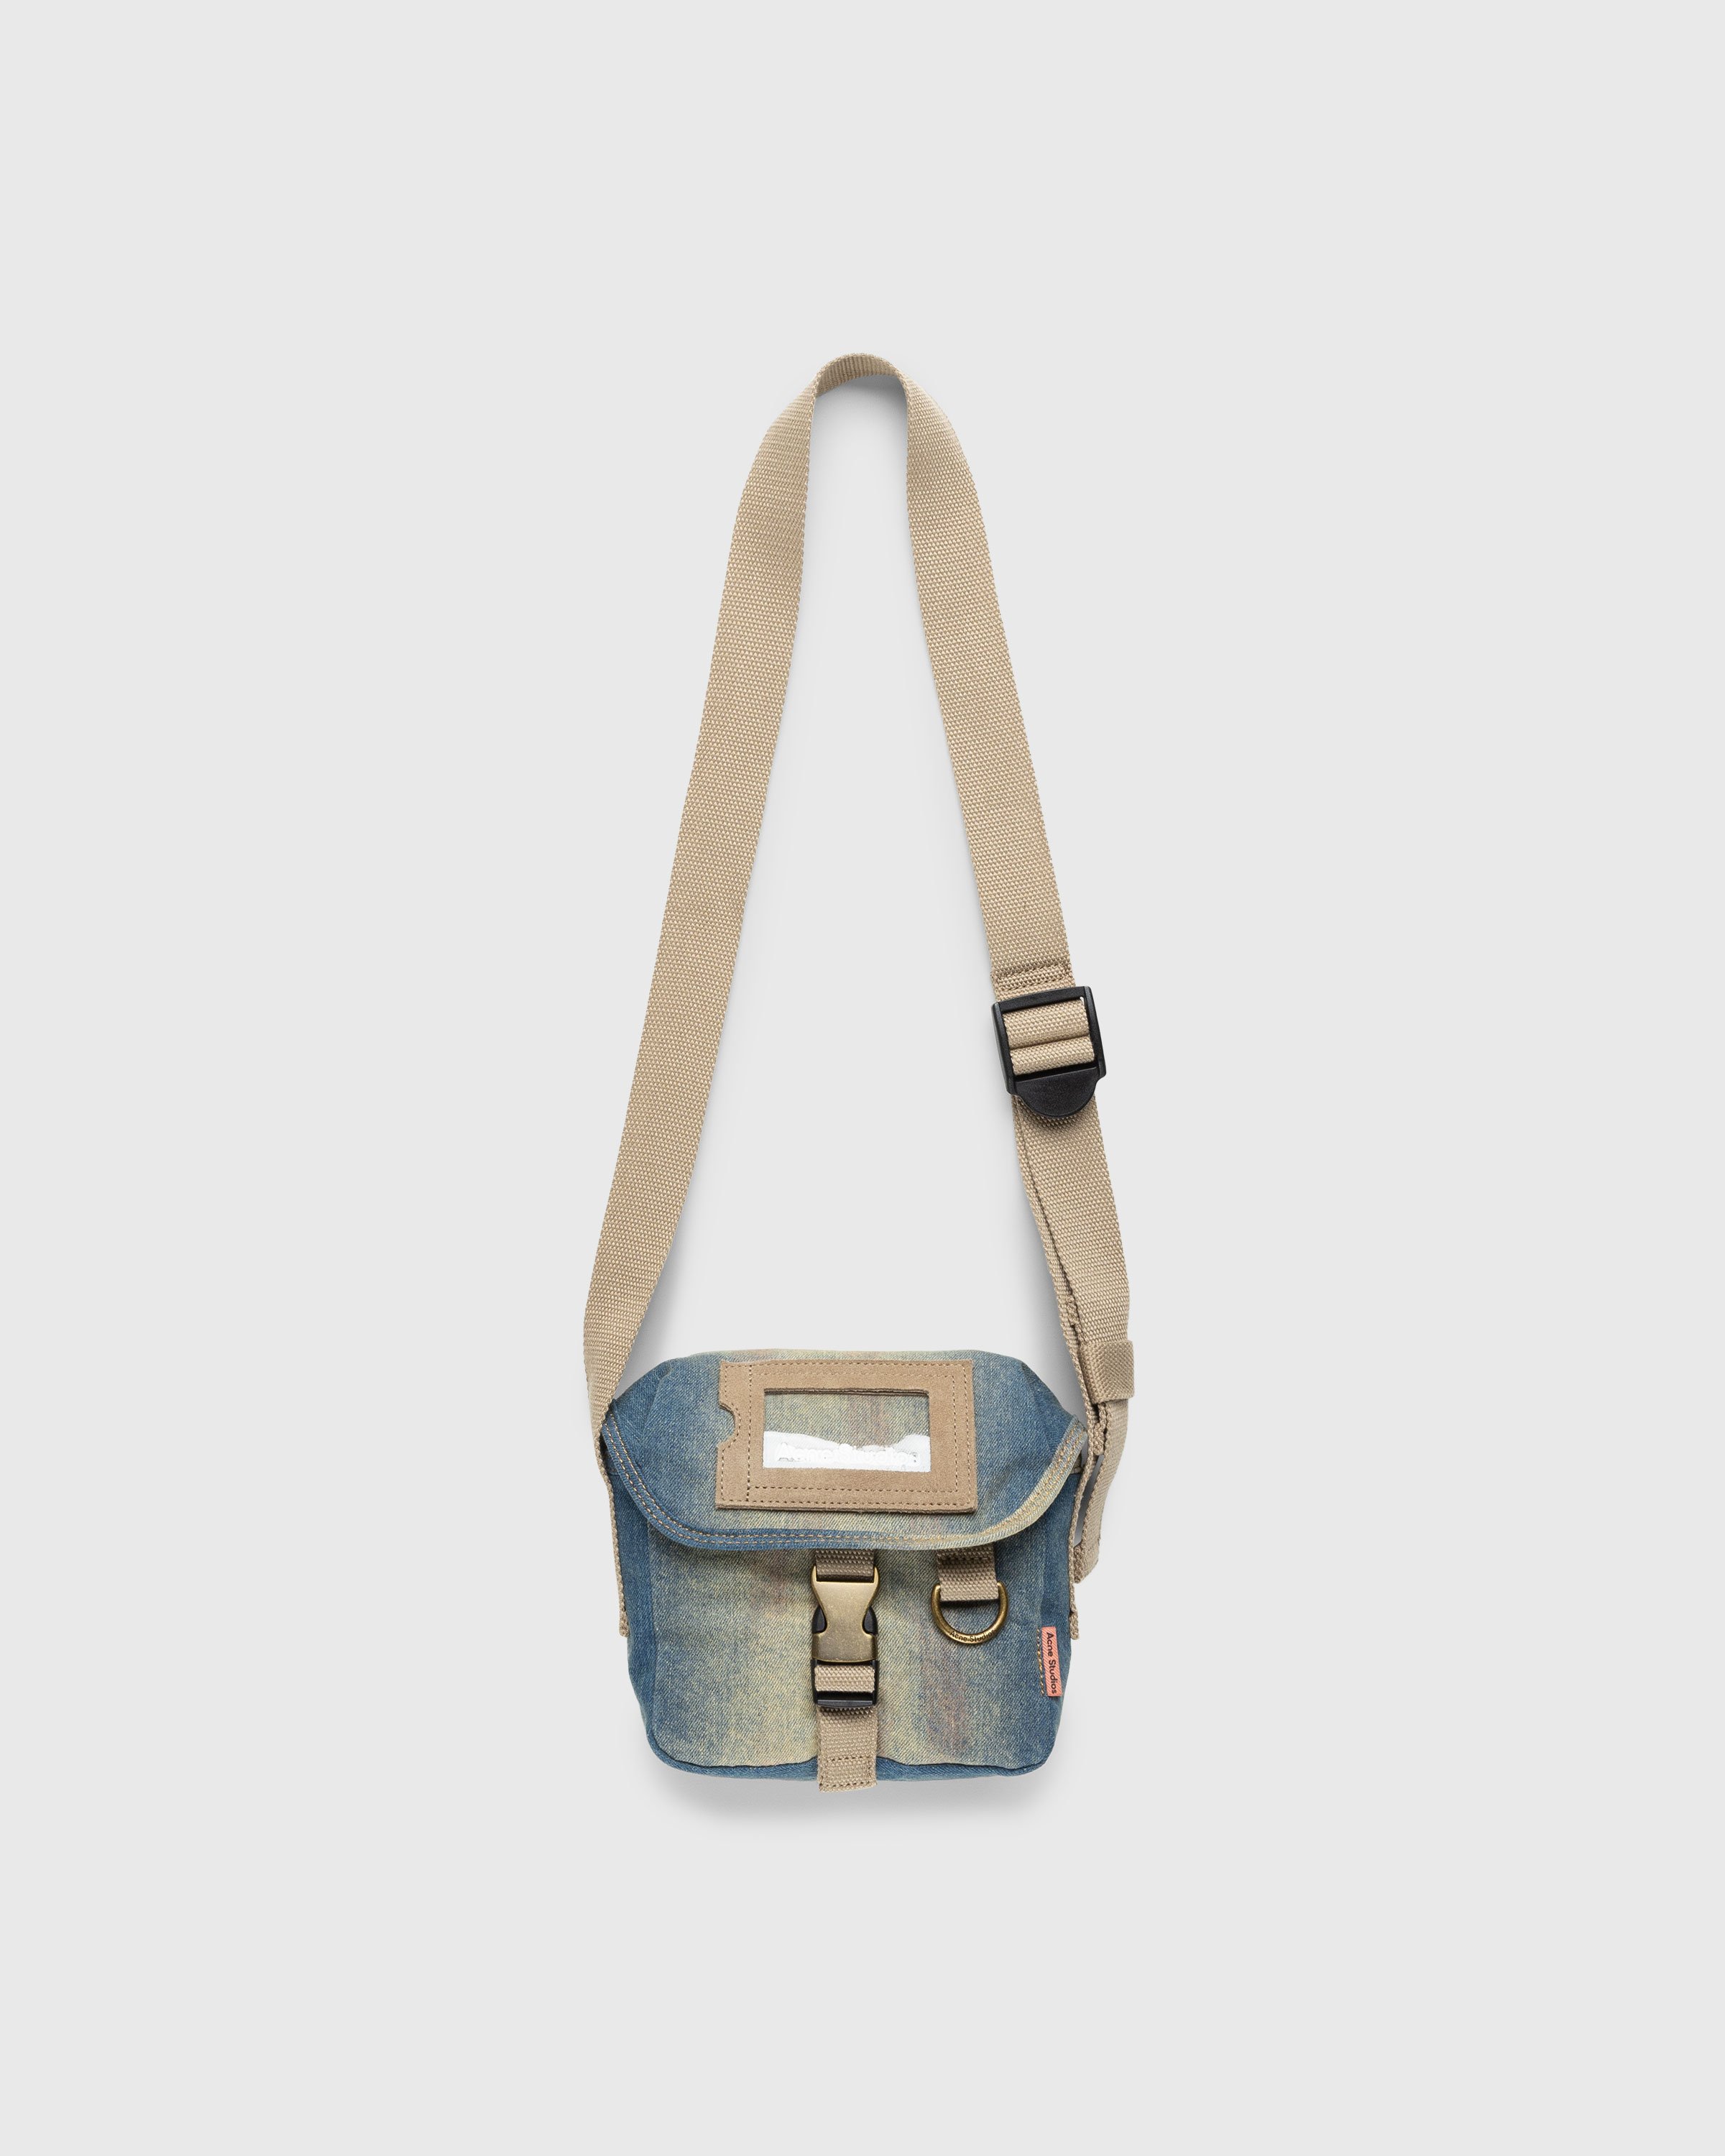 Acne Studios - Mini Messenger Bag Light Blue/Beige - Accessories - Multi - Image 1